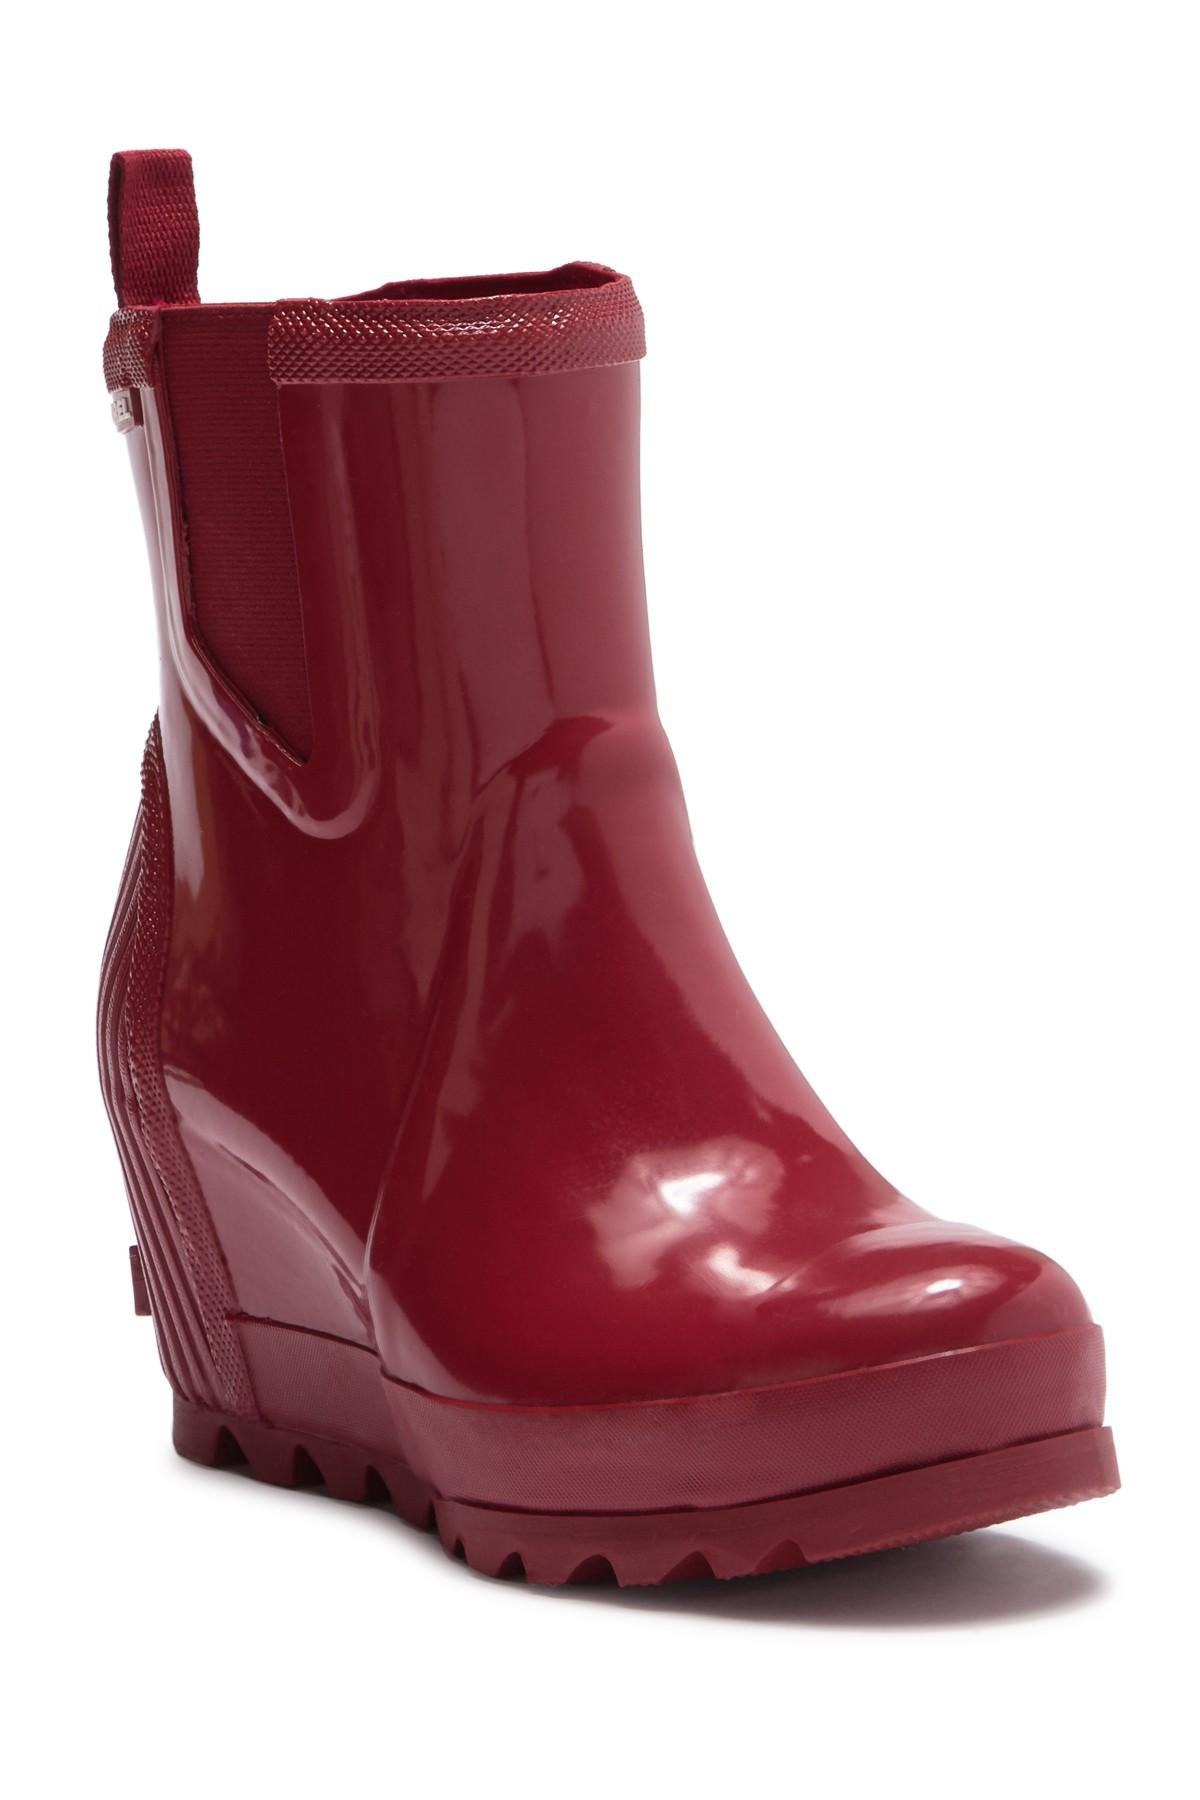 Sorel Joan Rain Waterproof Gloss Wedge Chelsea Boot in Red - Lyst